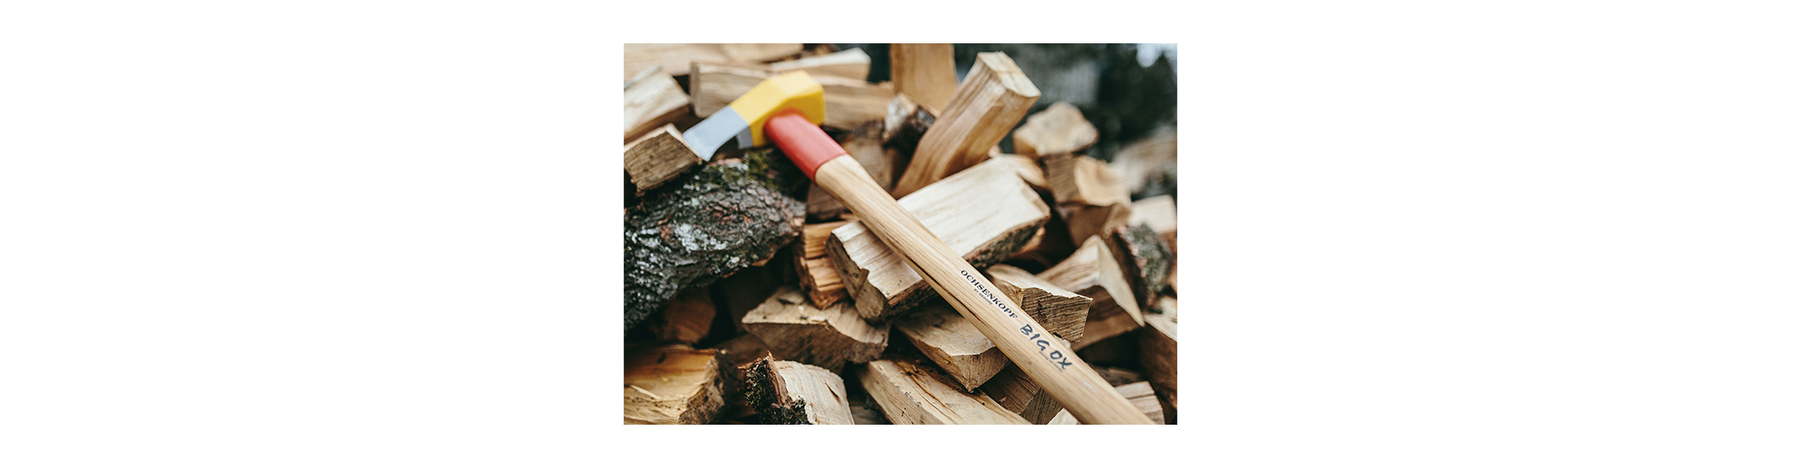 Ochsenkopf, Great Steel, Quality Wood - Awesome Axes